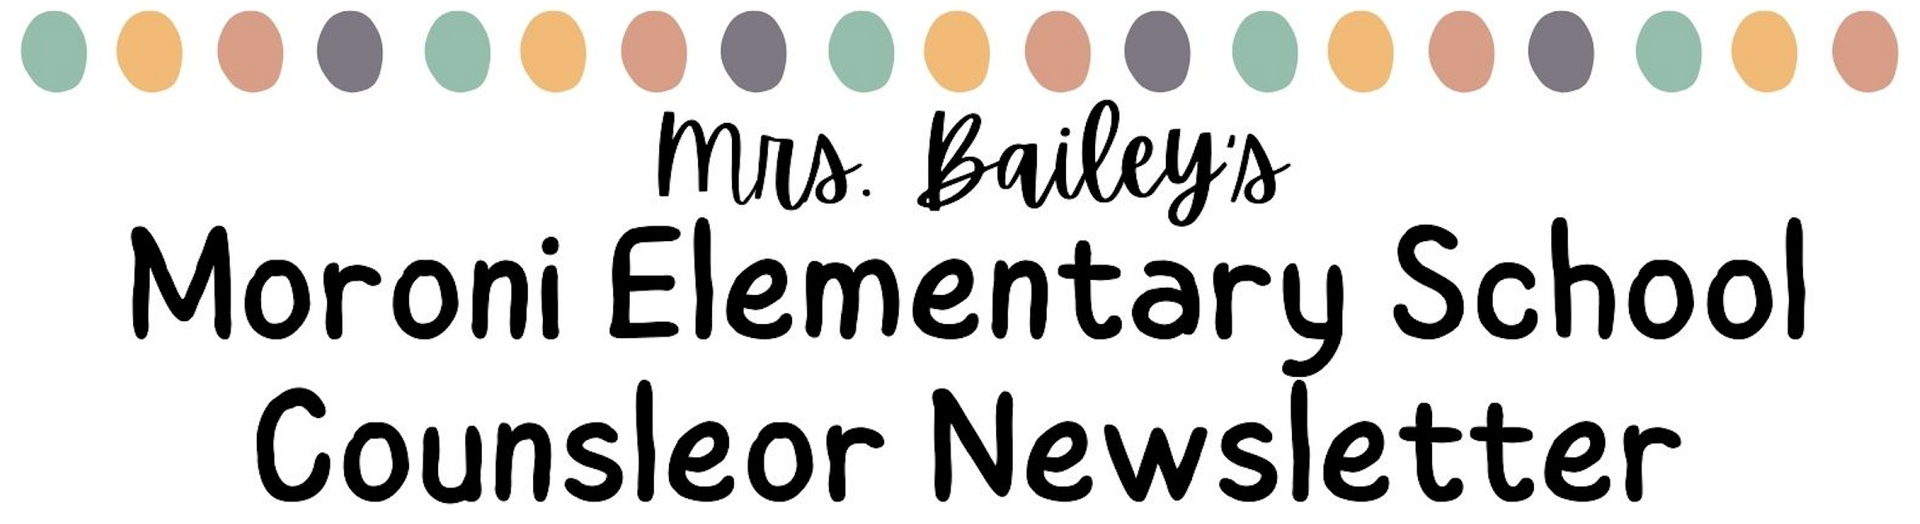 Mrs. Bailey's Moroni Elementary School Counselor Newsletter